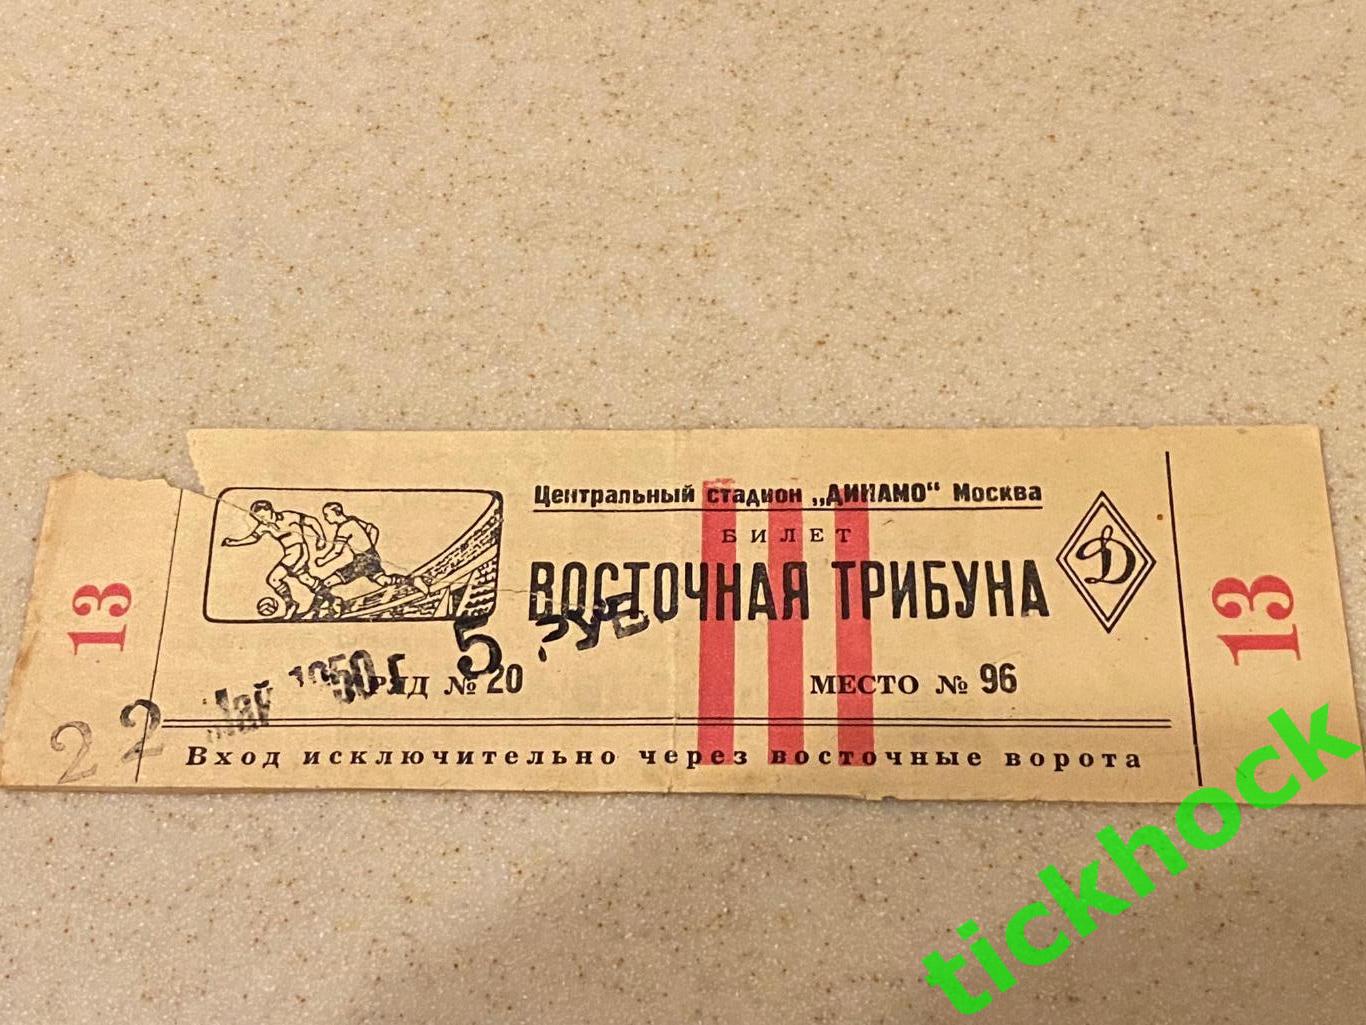 Спартак Москва - Динамо Тбилиси 22.05.1950-- билет - восточная трибуна